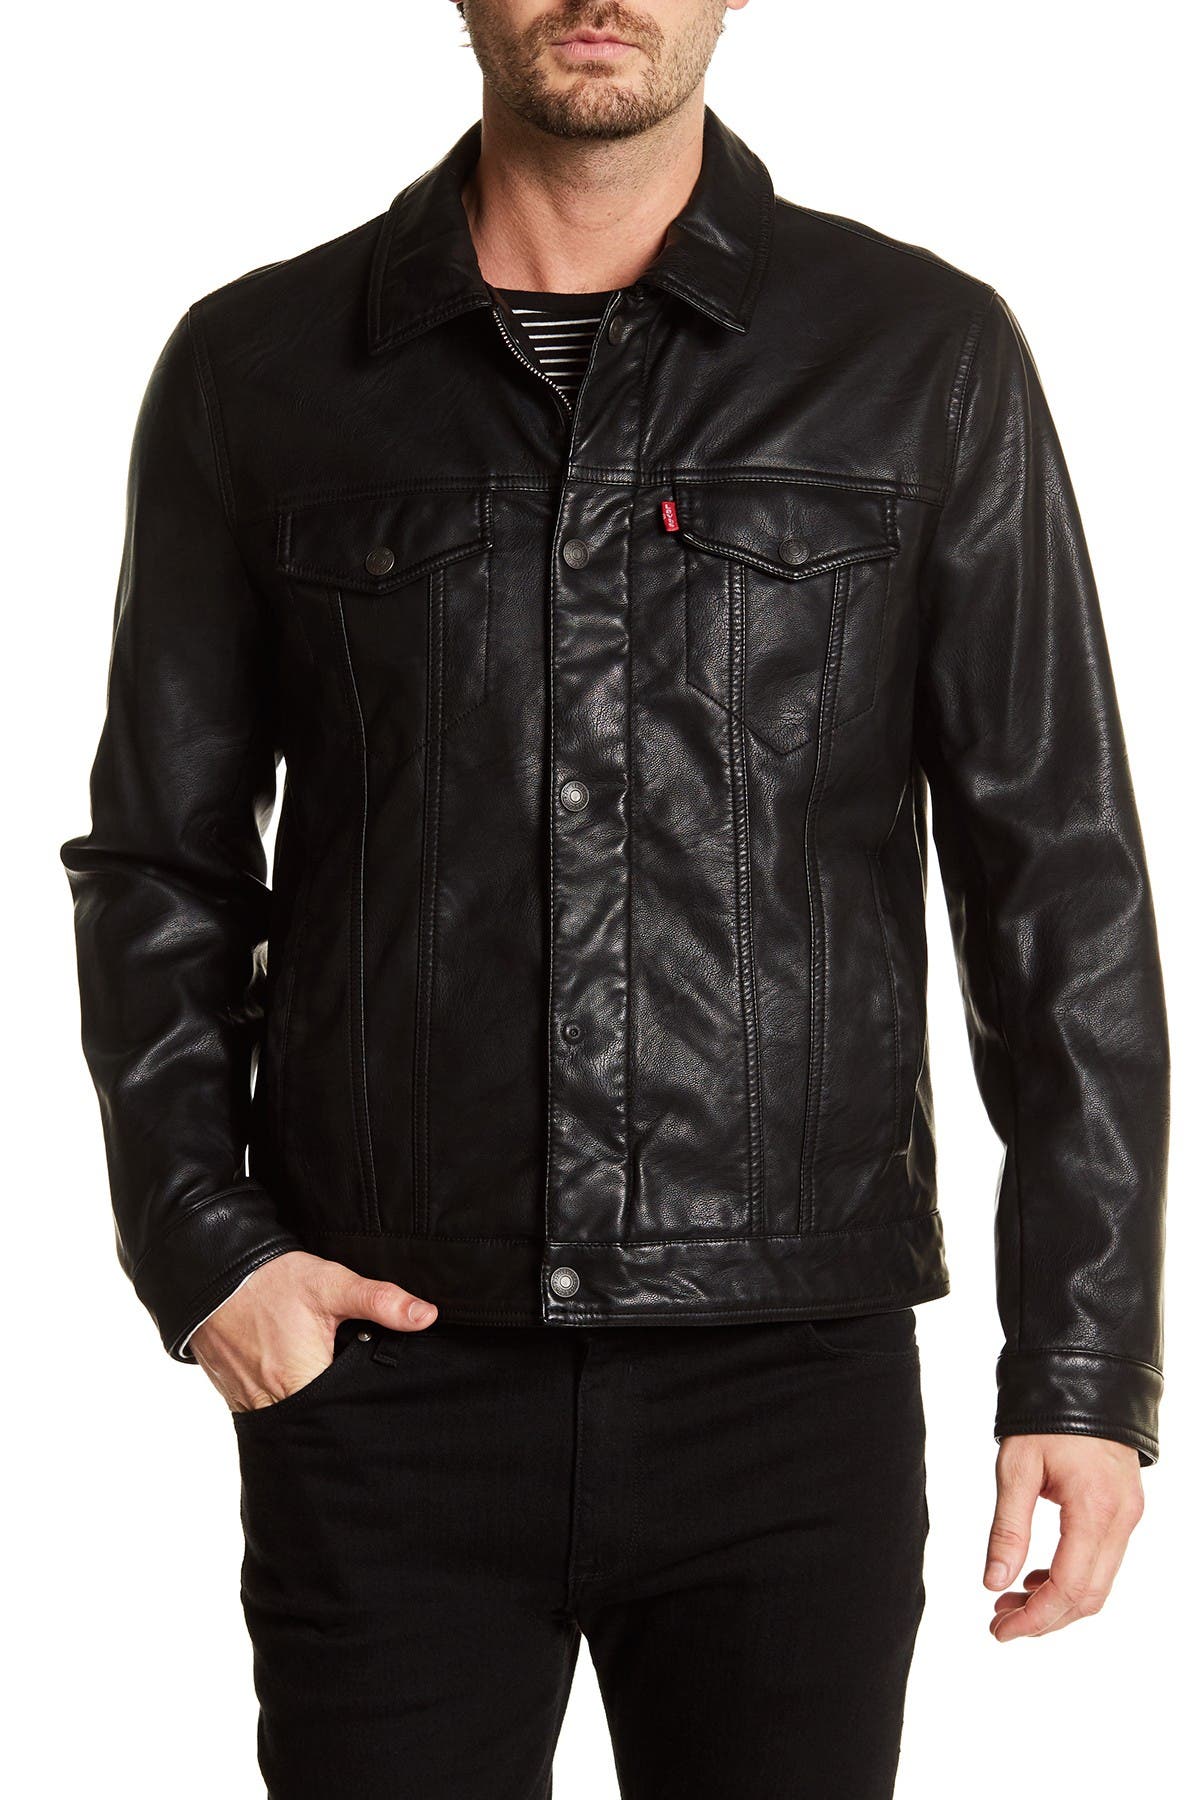 levi's black leather trucker jacket